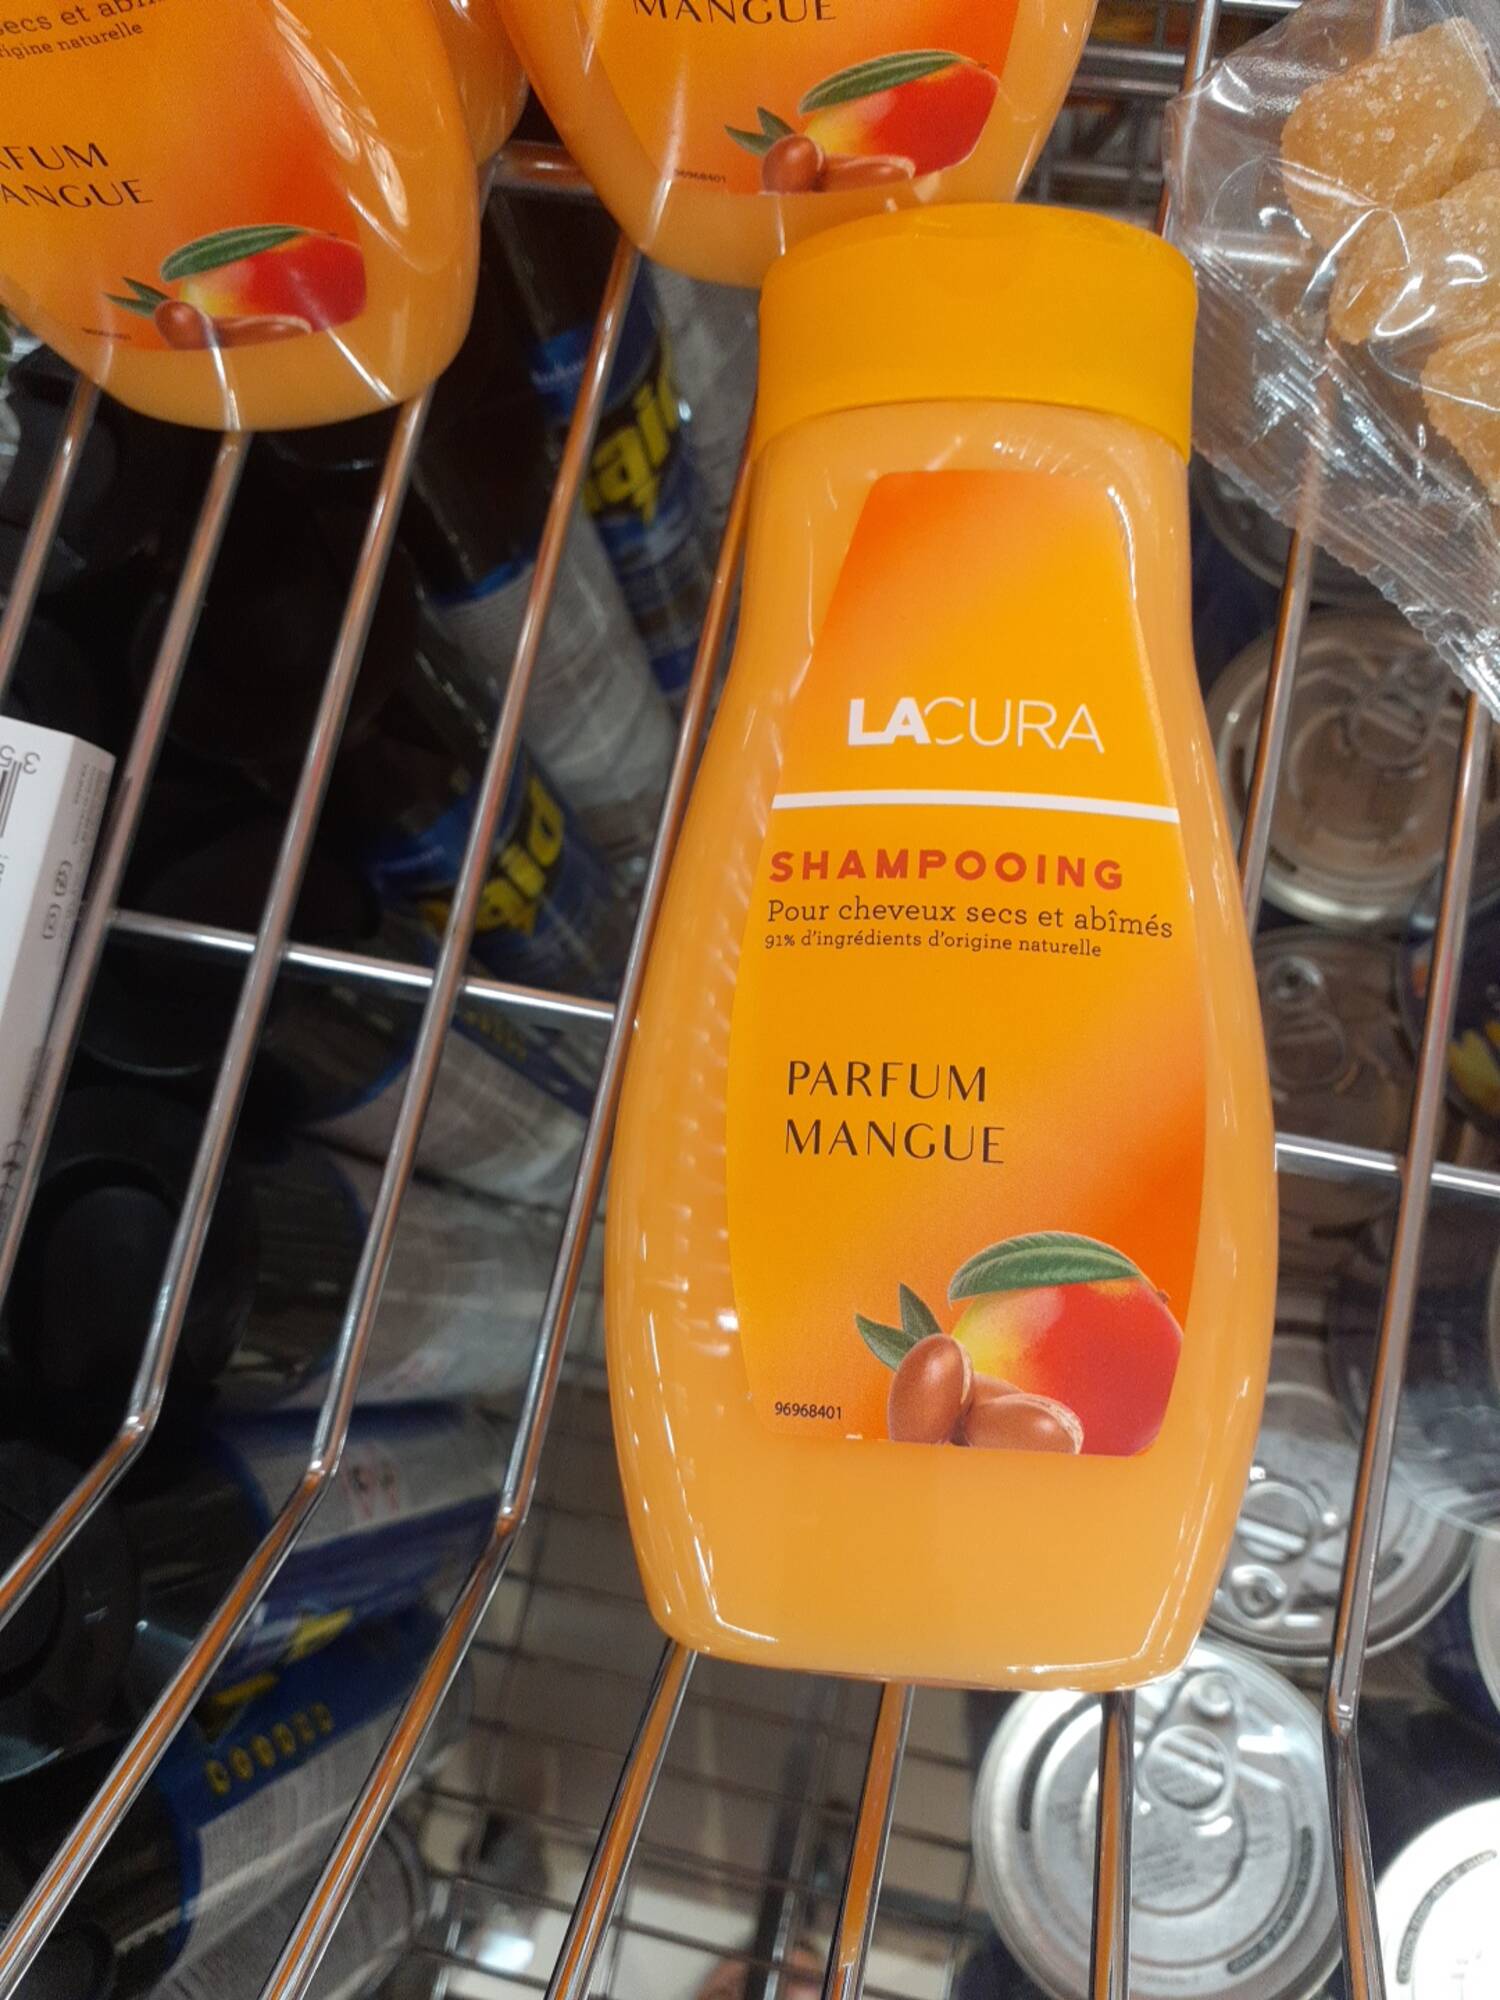 LACURA - Shampoing Parfum Mangue